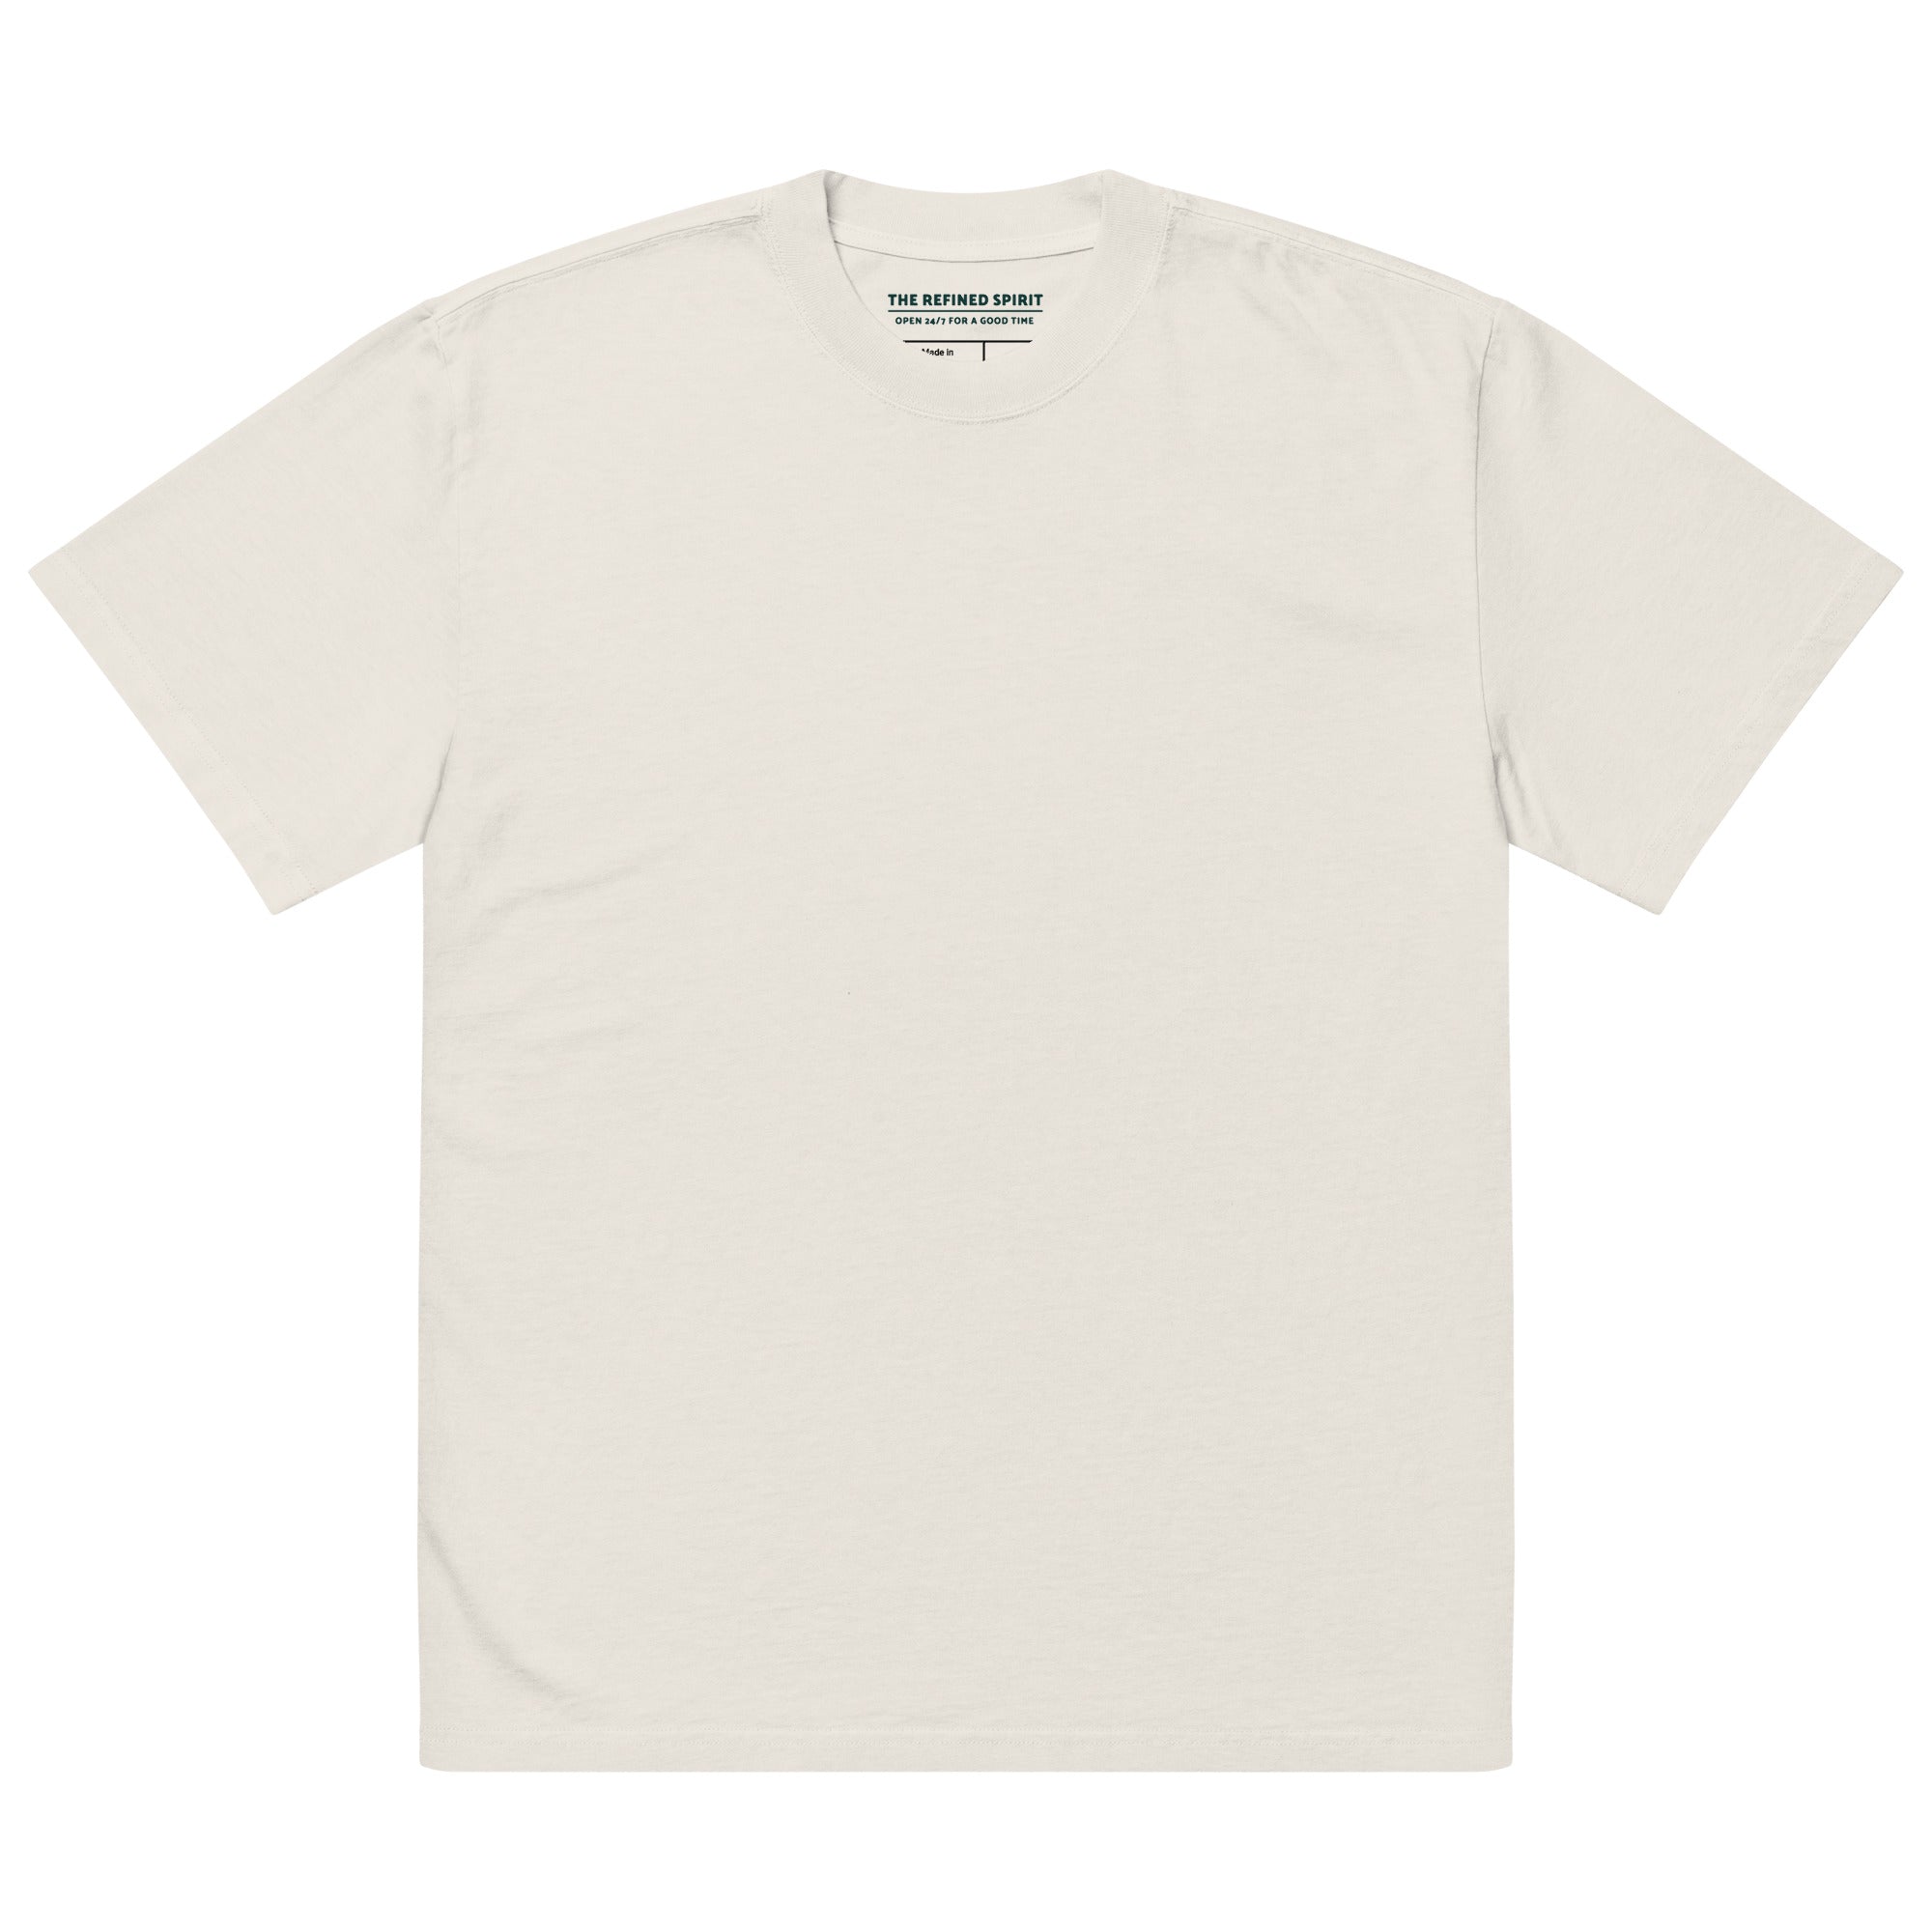 Capri Positano Amalfi - Oversized T-shirt